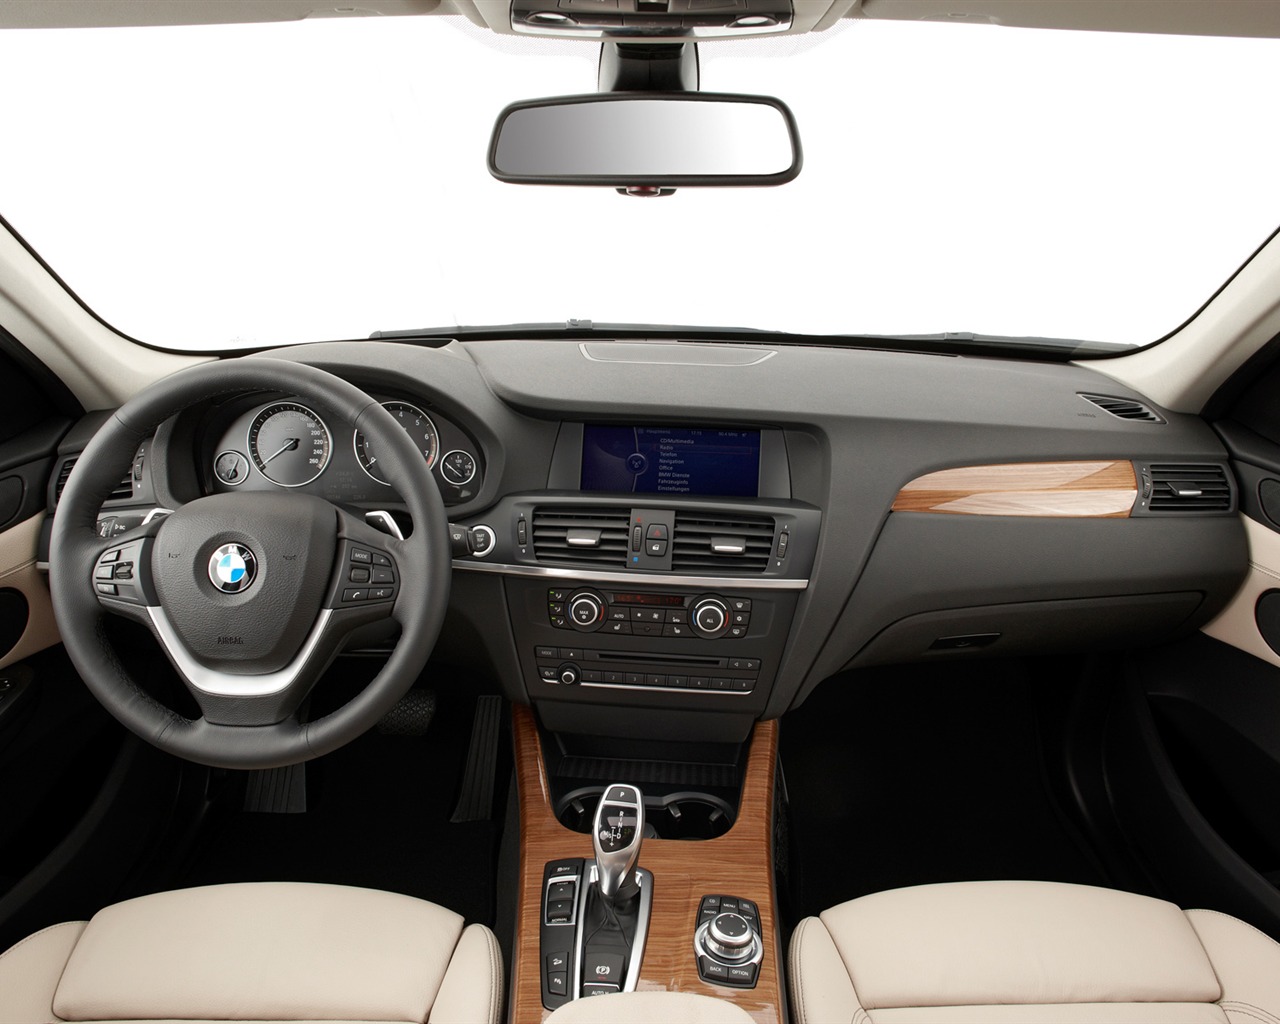 BMW X3 xDrive35i - 2010 寶馬(一) #39 - 1280x1024